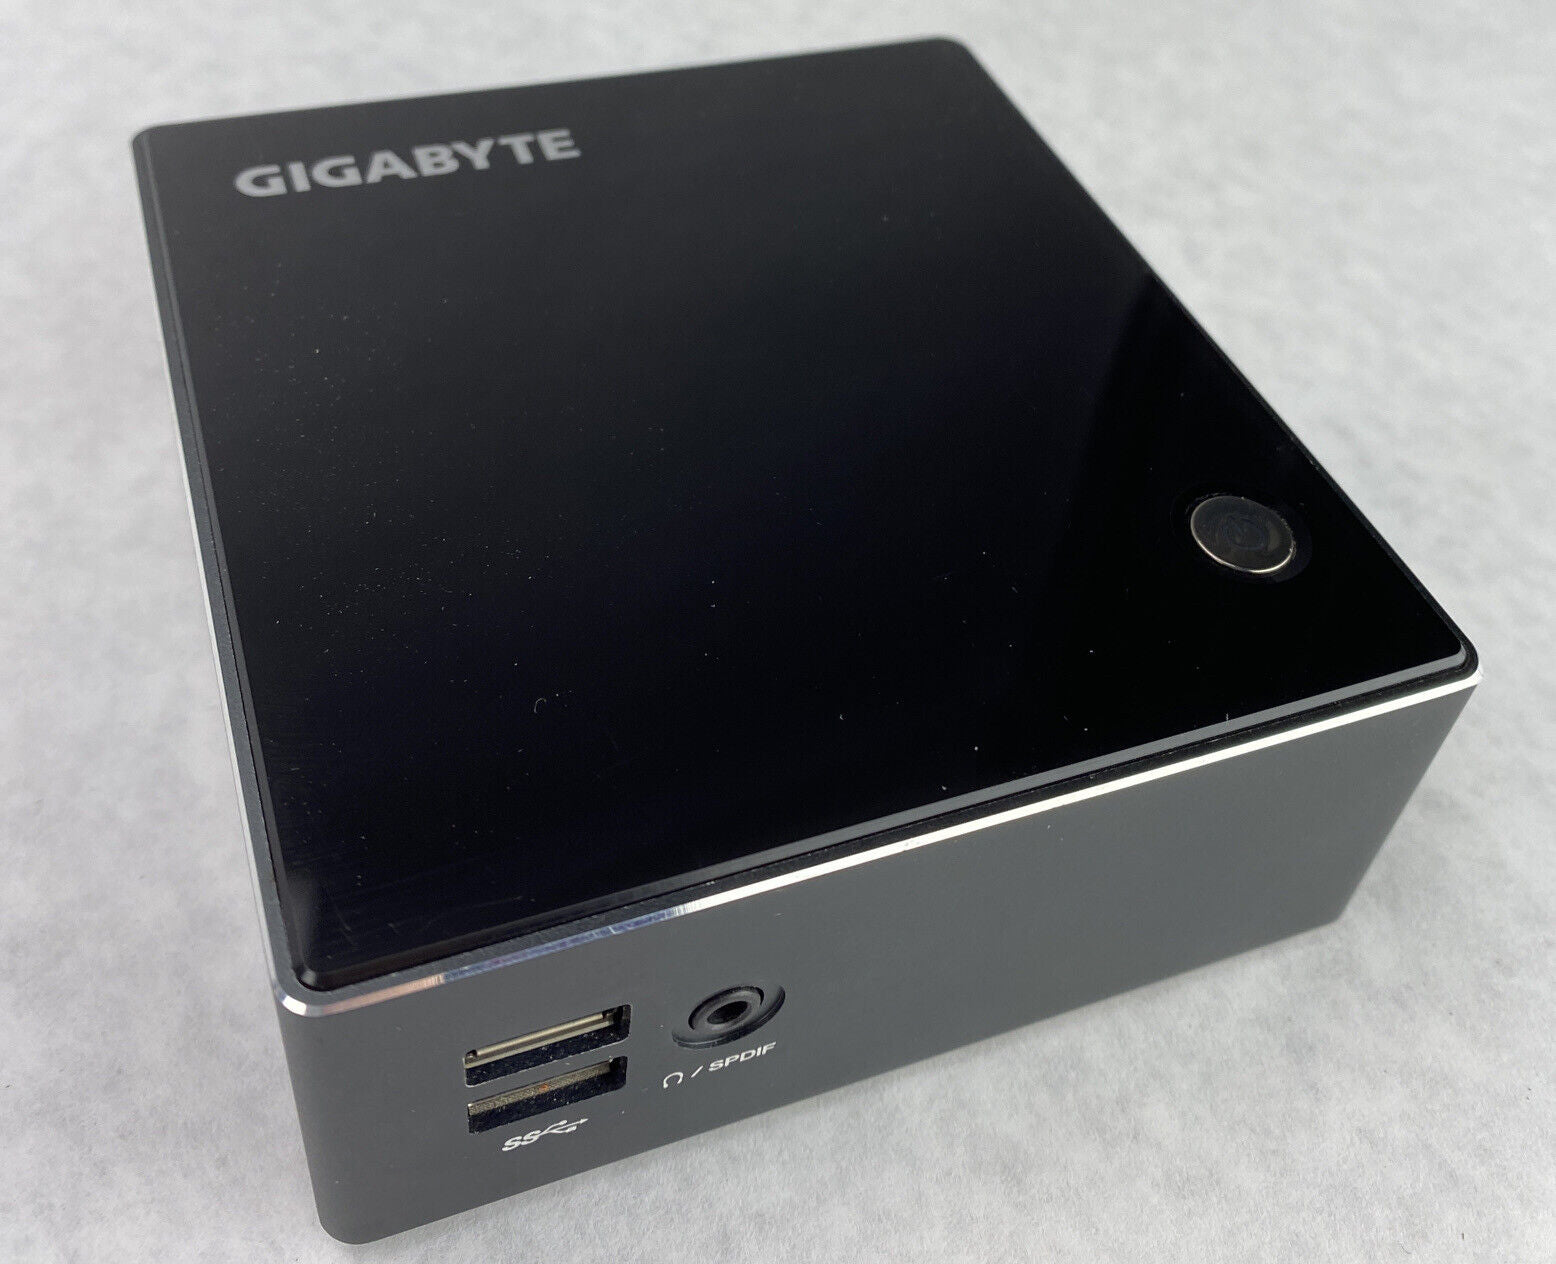 Gigabyte GB-BXi5H-4200 Slim 1.6GHz Core i5-4200U 8GB RAM NO DRIVE No AC Adapter